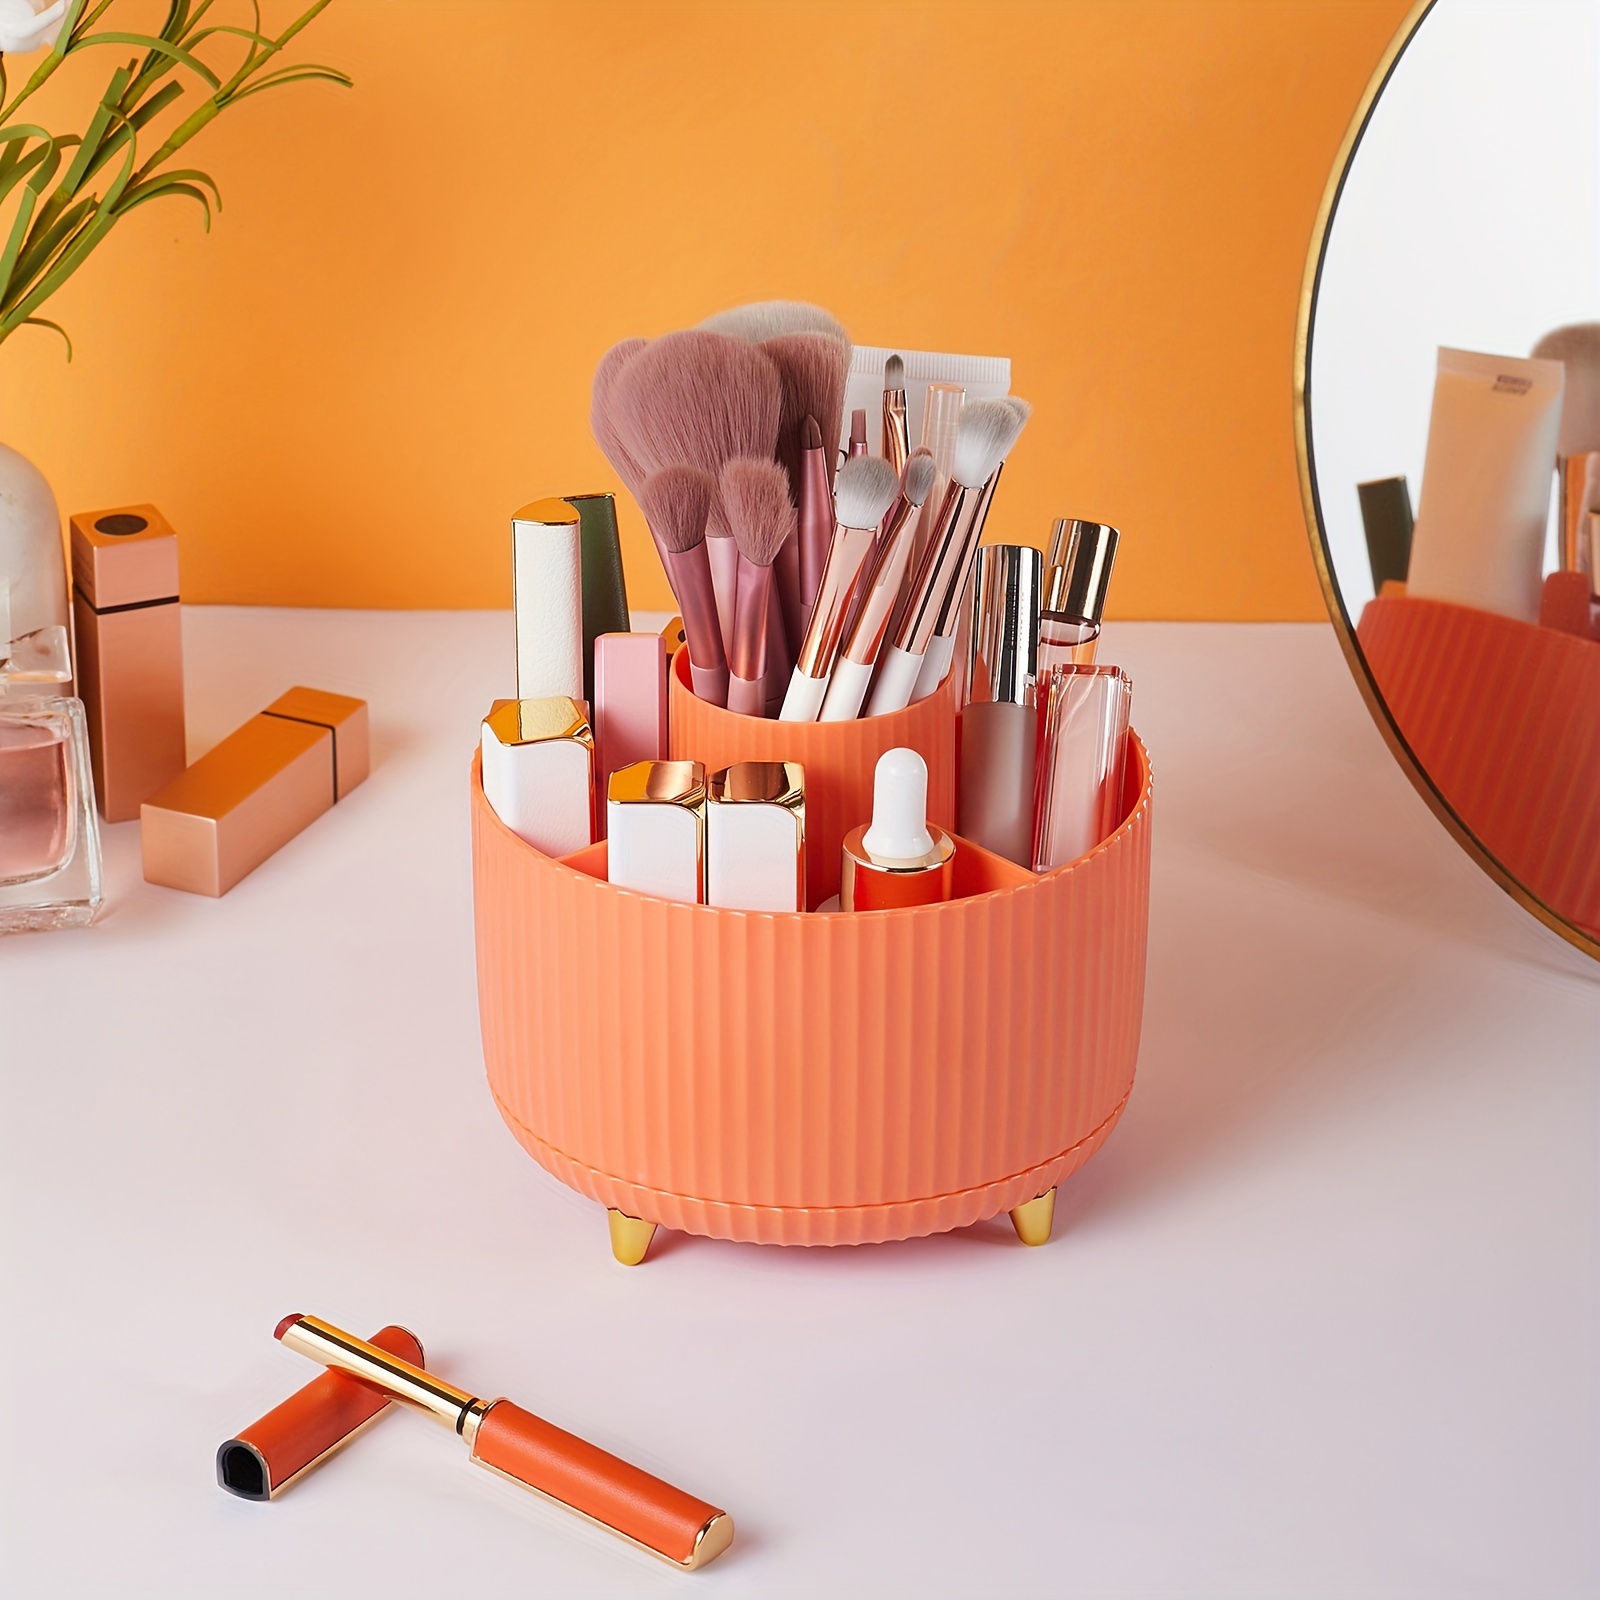 5 Compartments Makeup Brush Holder Organizer - Multifunctional 360 Degree  Rotating Pen Pencil Holder for Desk